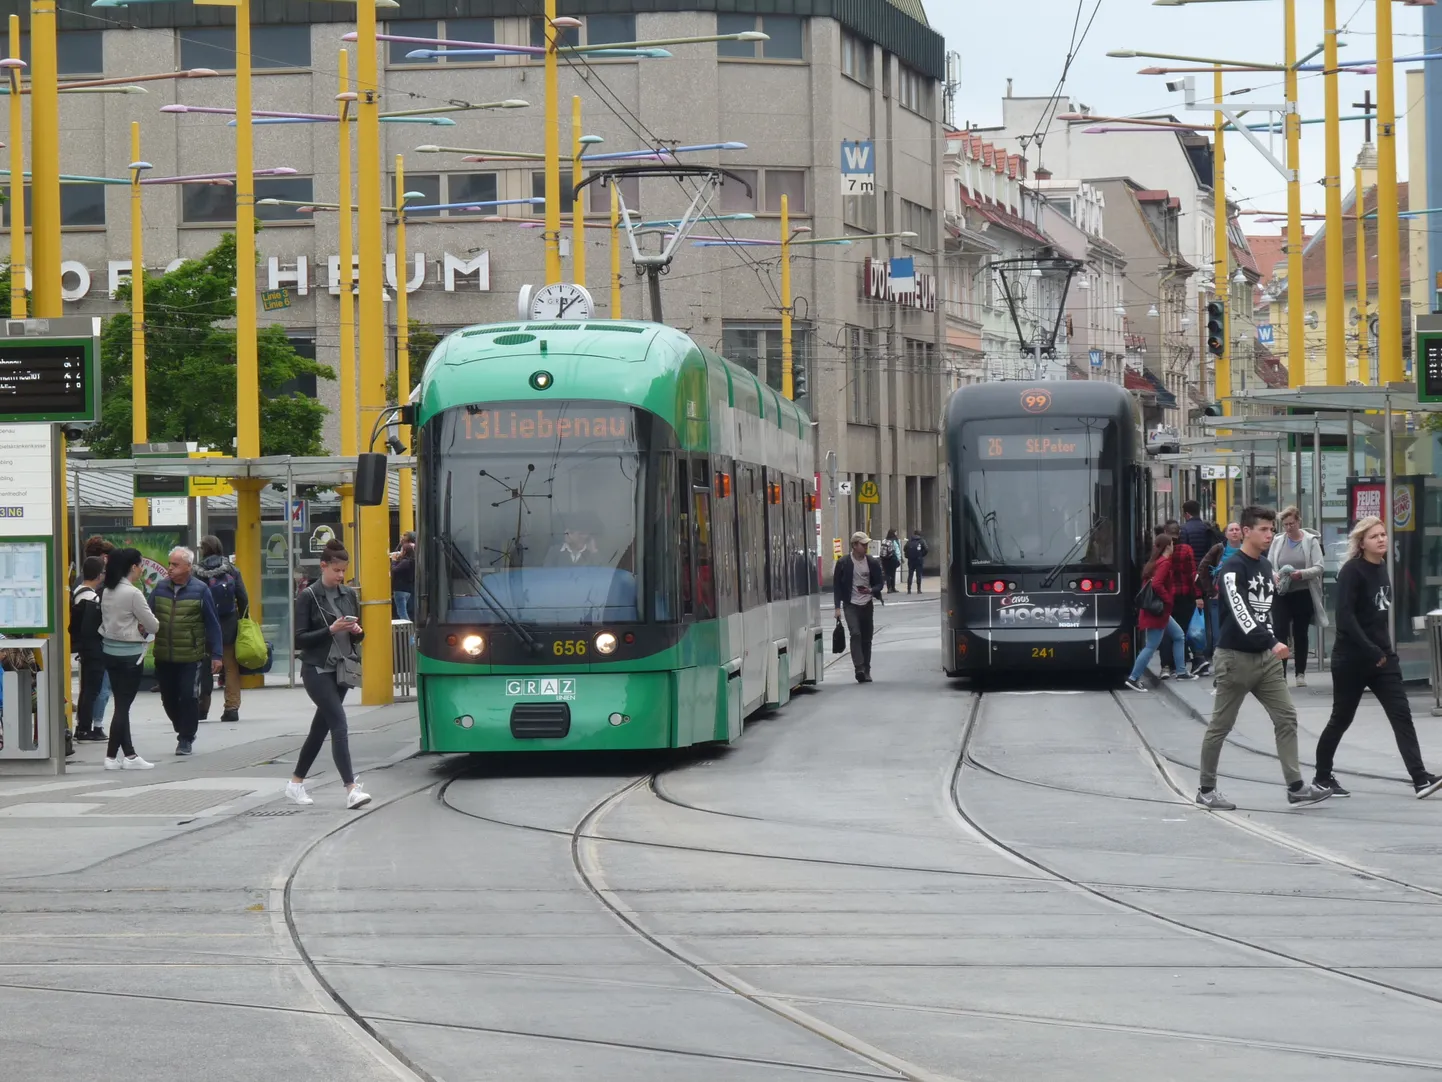 Trammid Grazis Jakominiplatzil, kus 14-aastane tüdruk kavatses terroriteo toime panna.